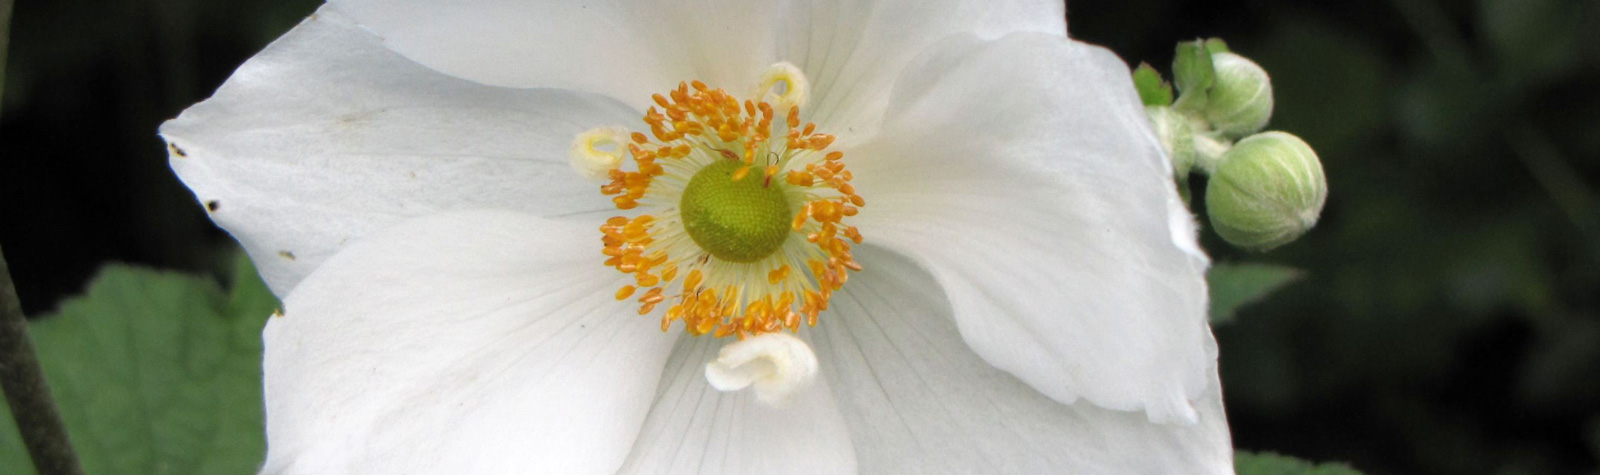 Anémona, la flor del amor intenso